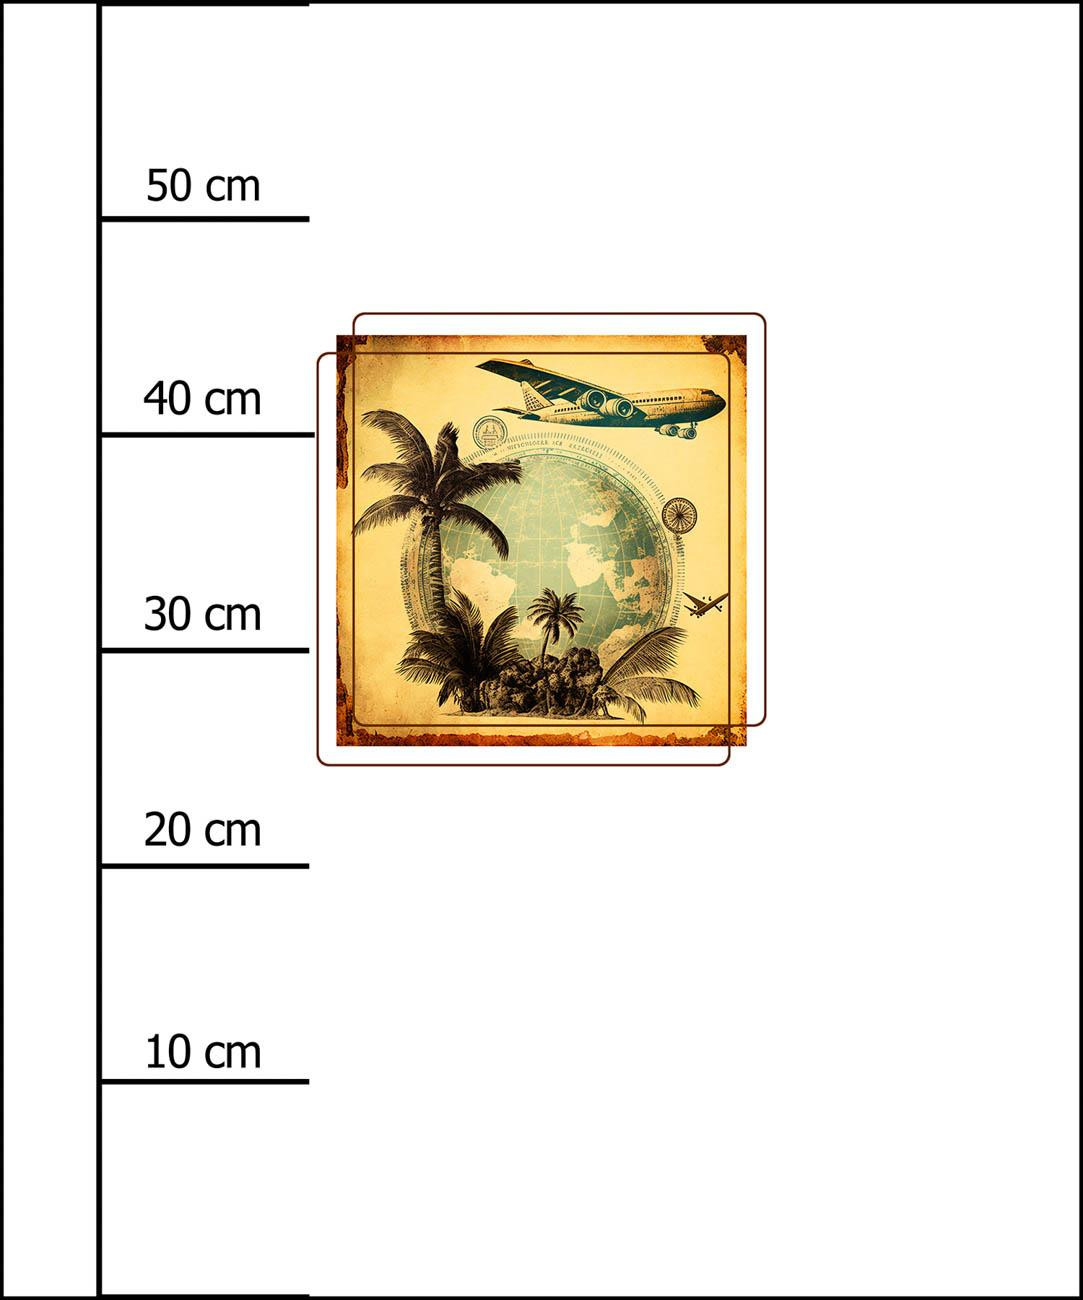 TRAVEL TIME MS. 7 - panel (60cm x 50cm) SINGLE JERSEY